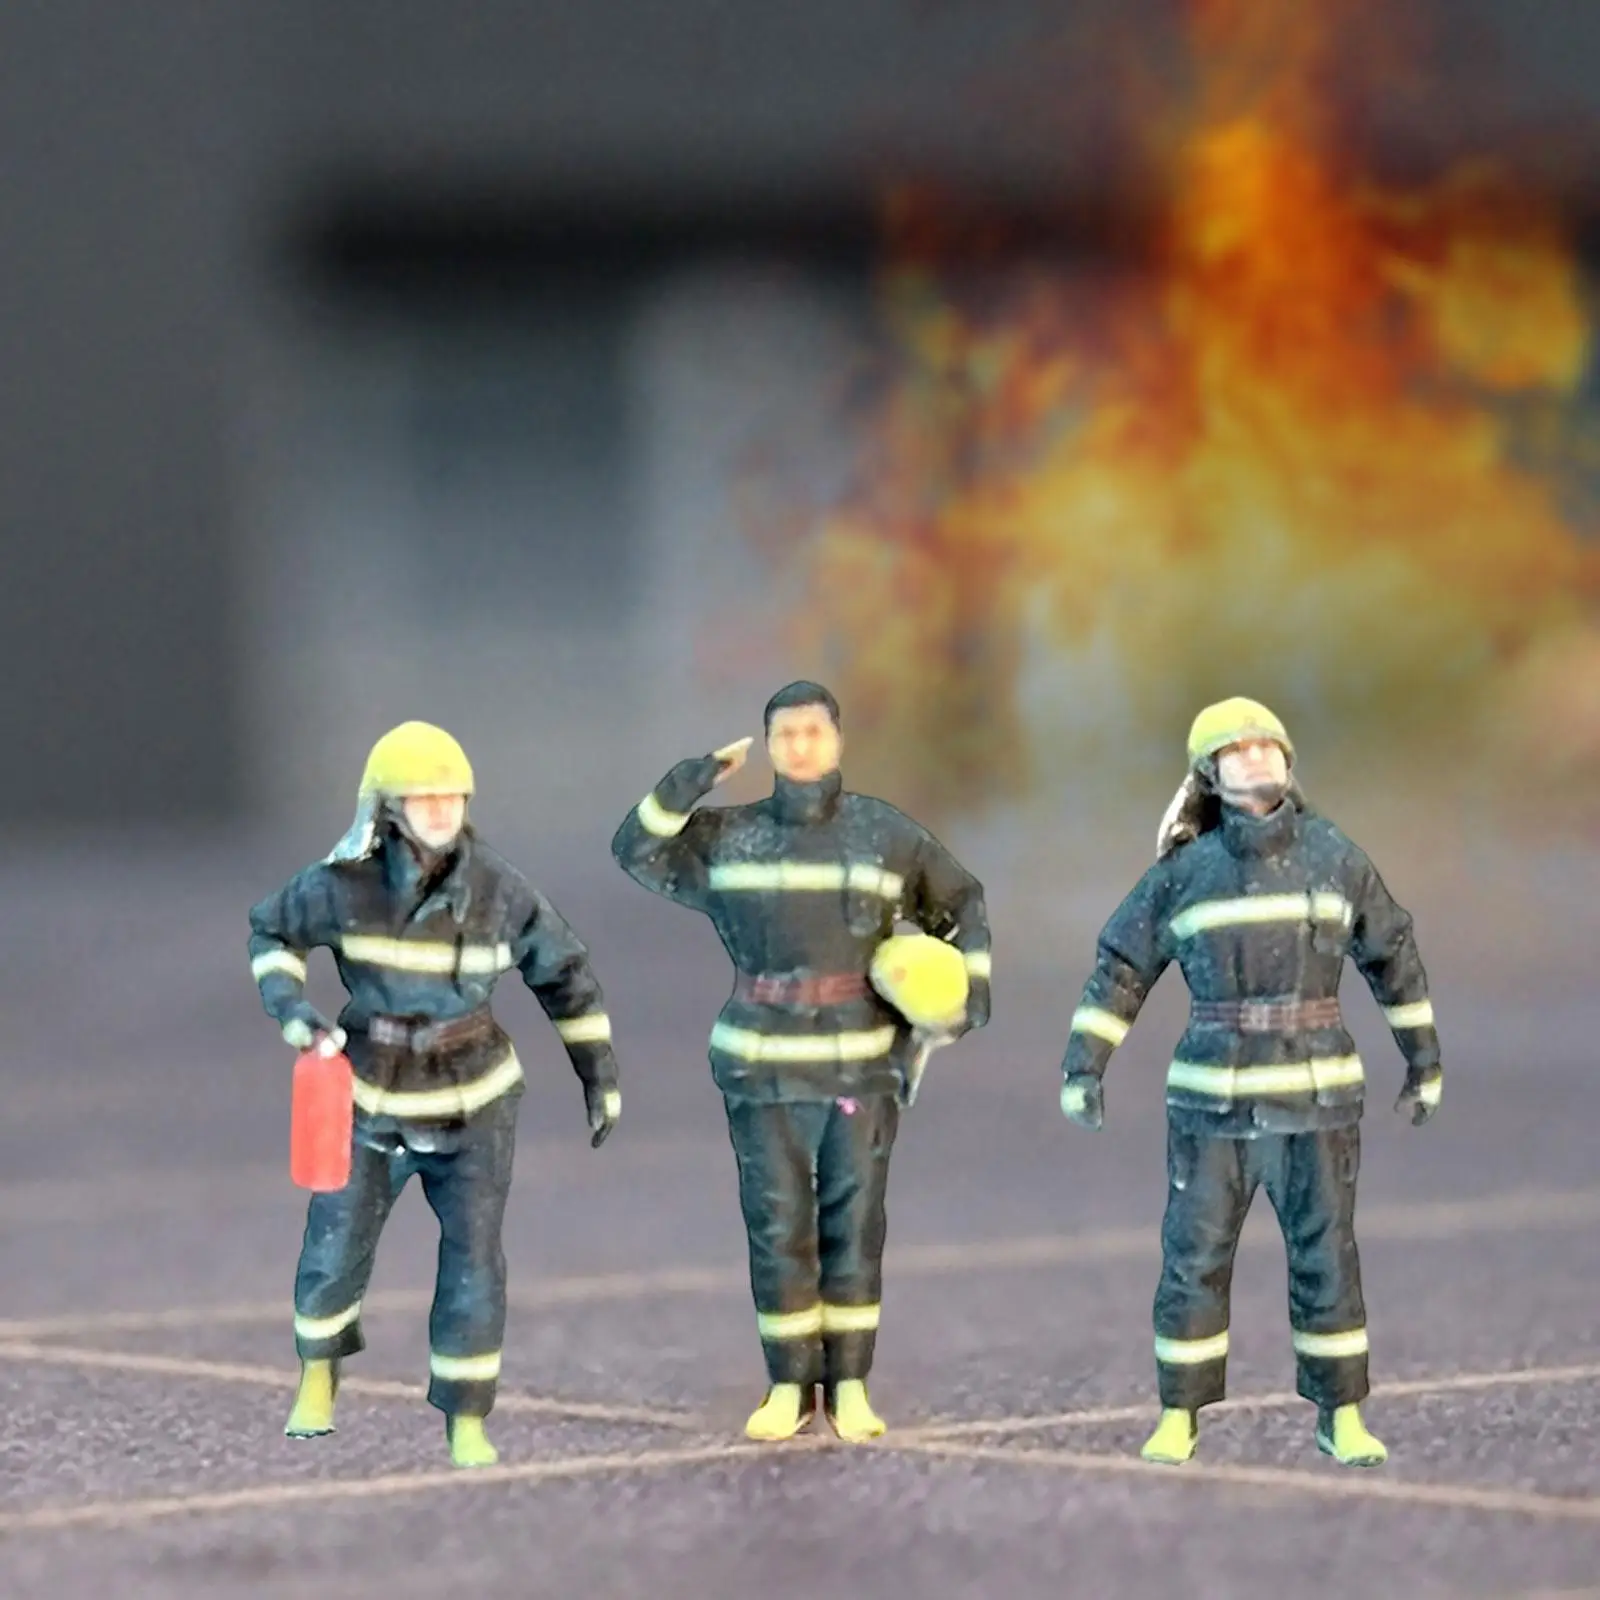 Miniature 1:64 Firefighter Figures Model Trains People Figures for DIY Scene